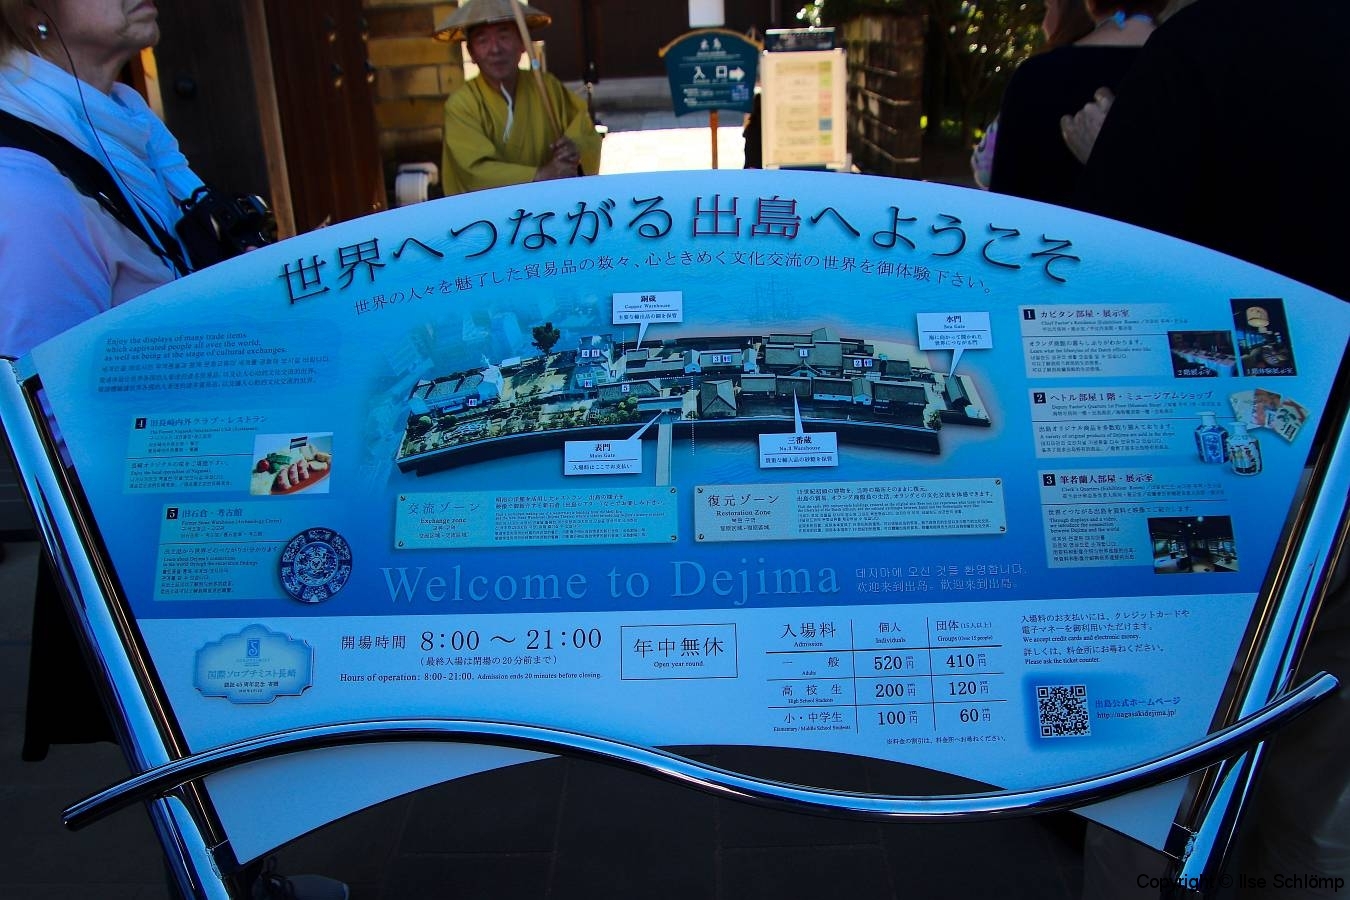 Japan, Nagasaki, Dejima